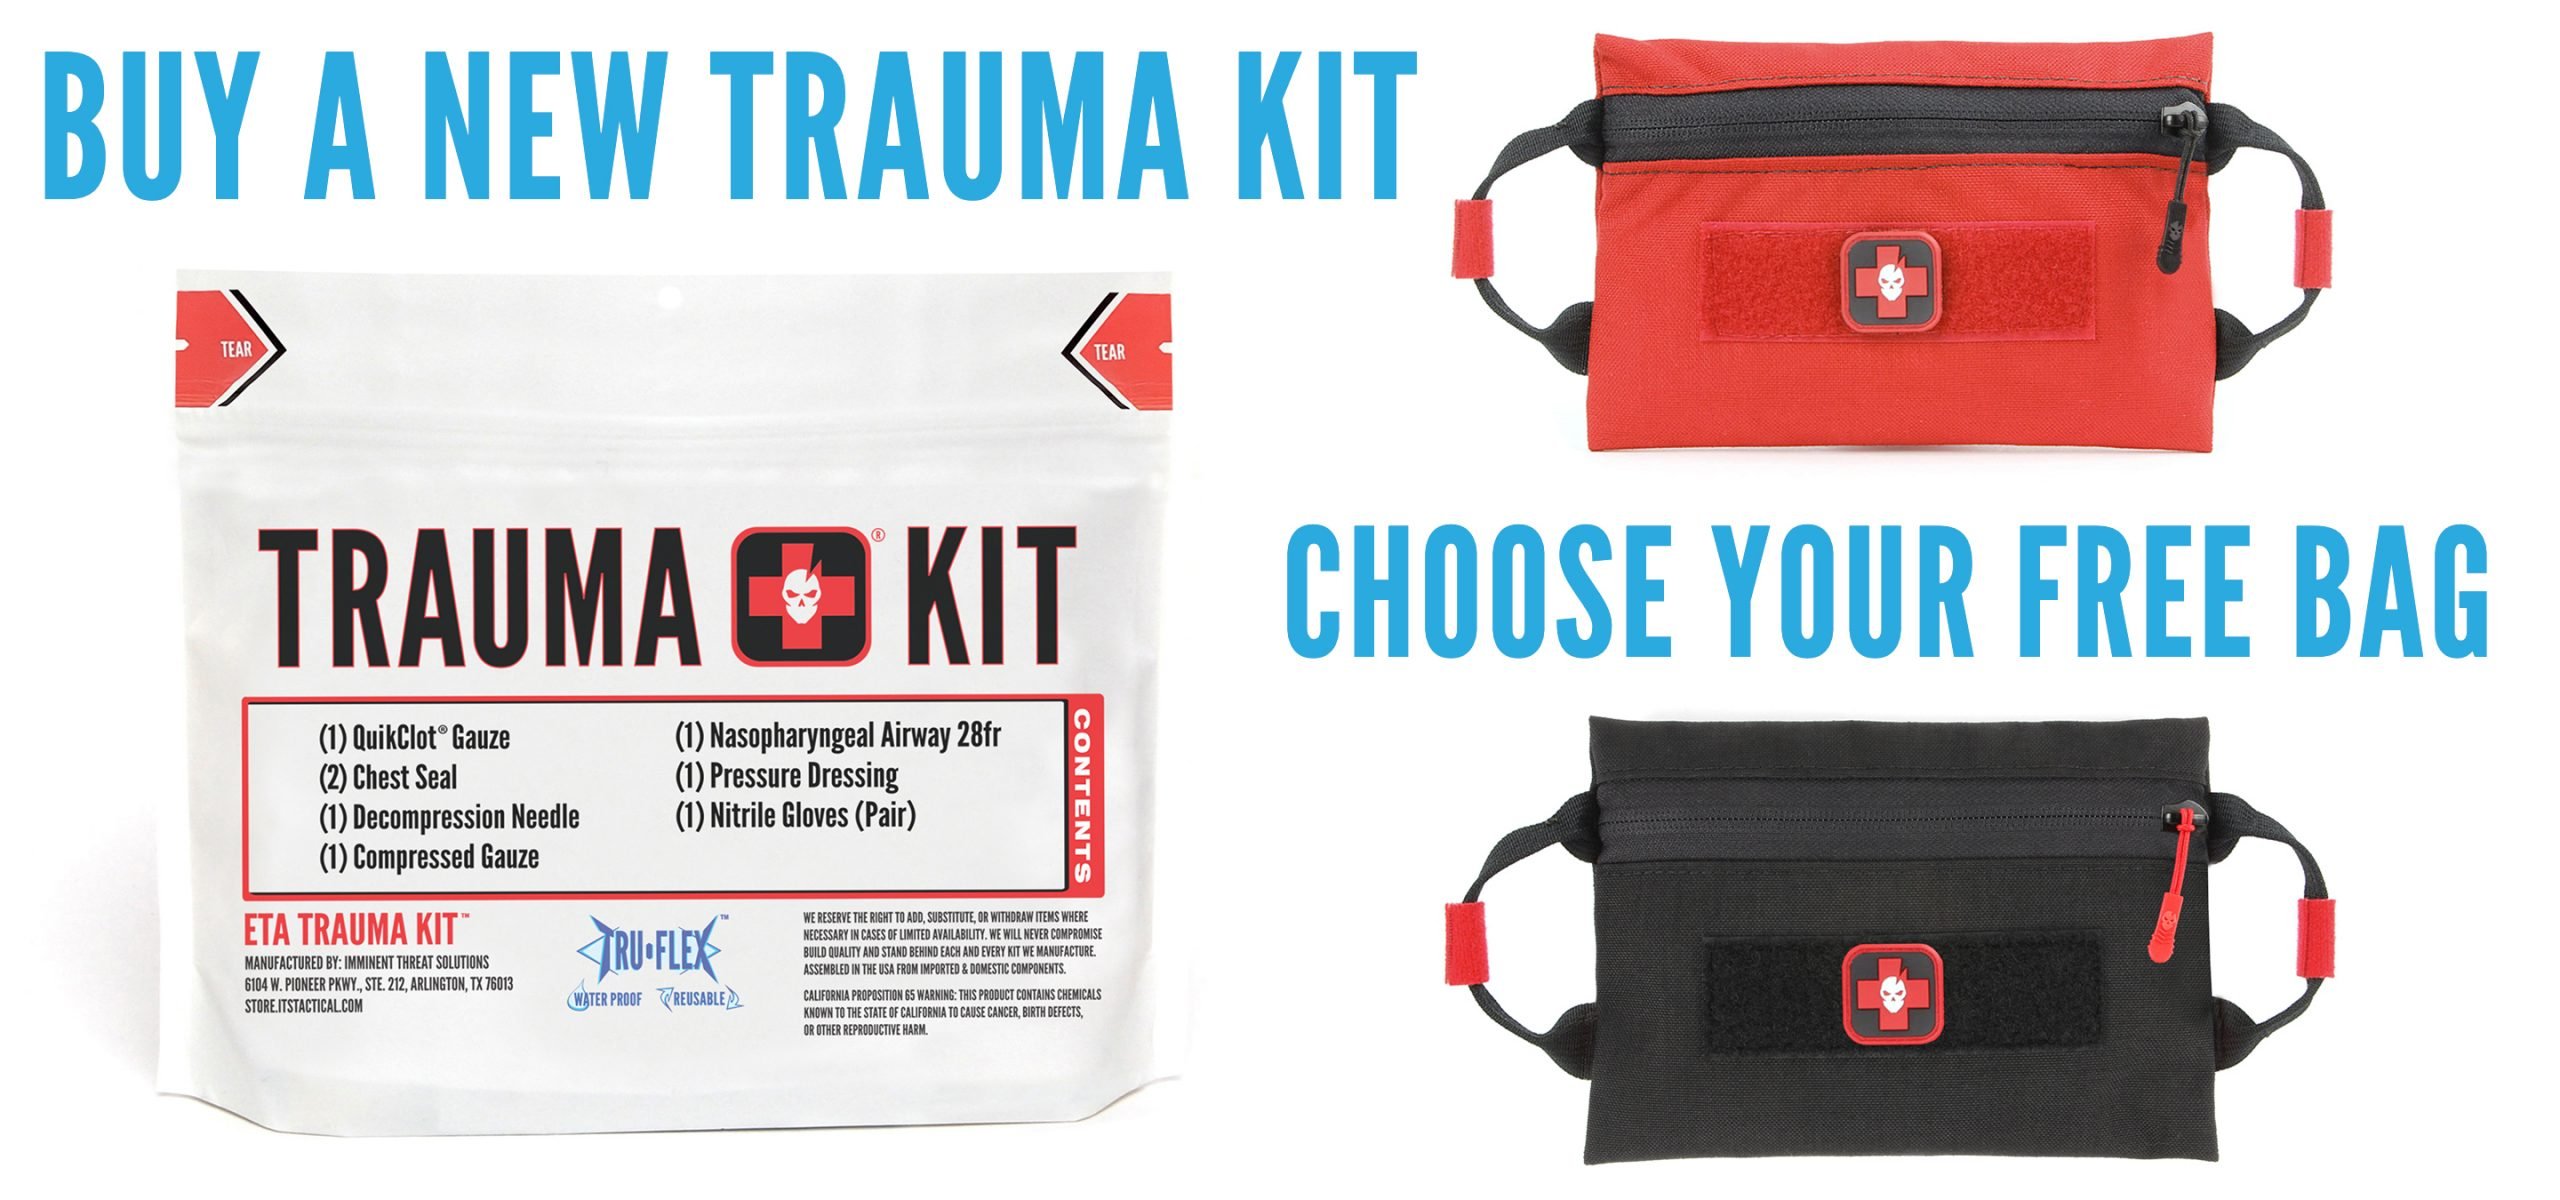 ITS Trauma Kit Promo Featured